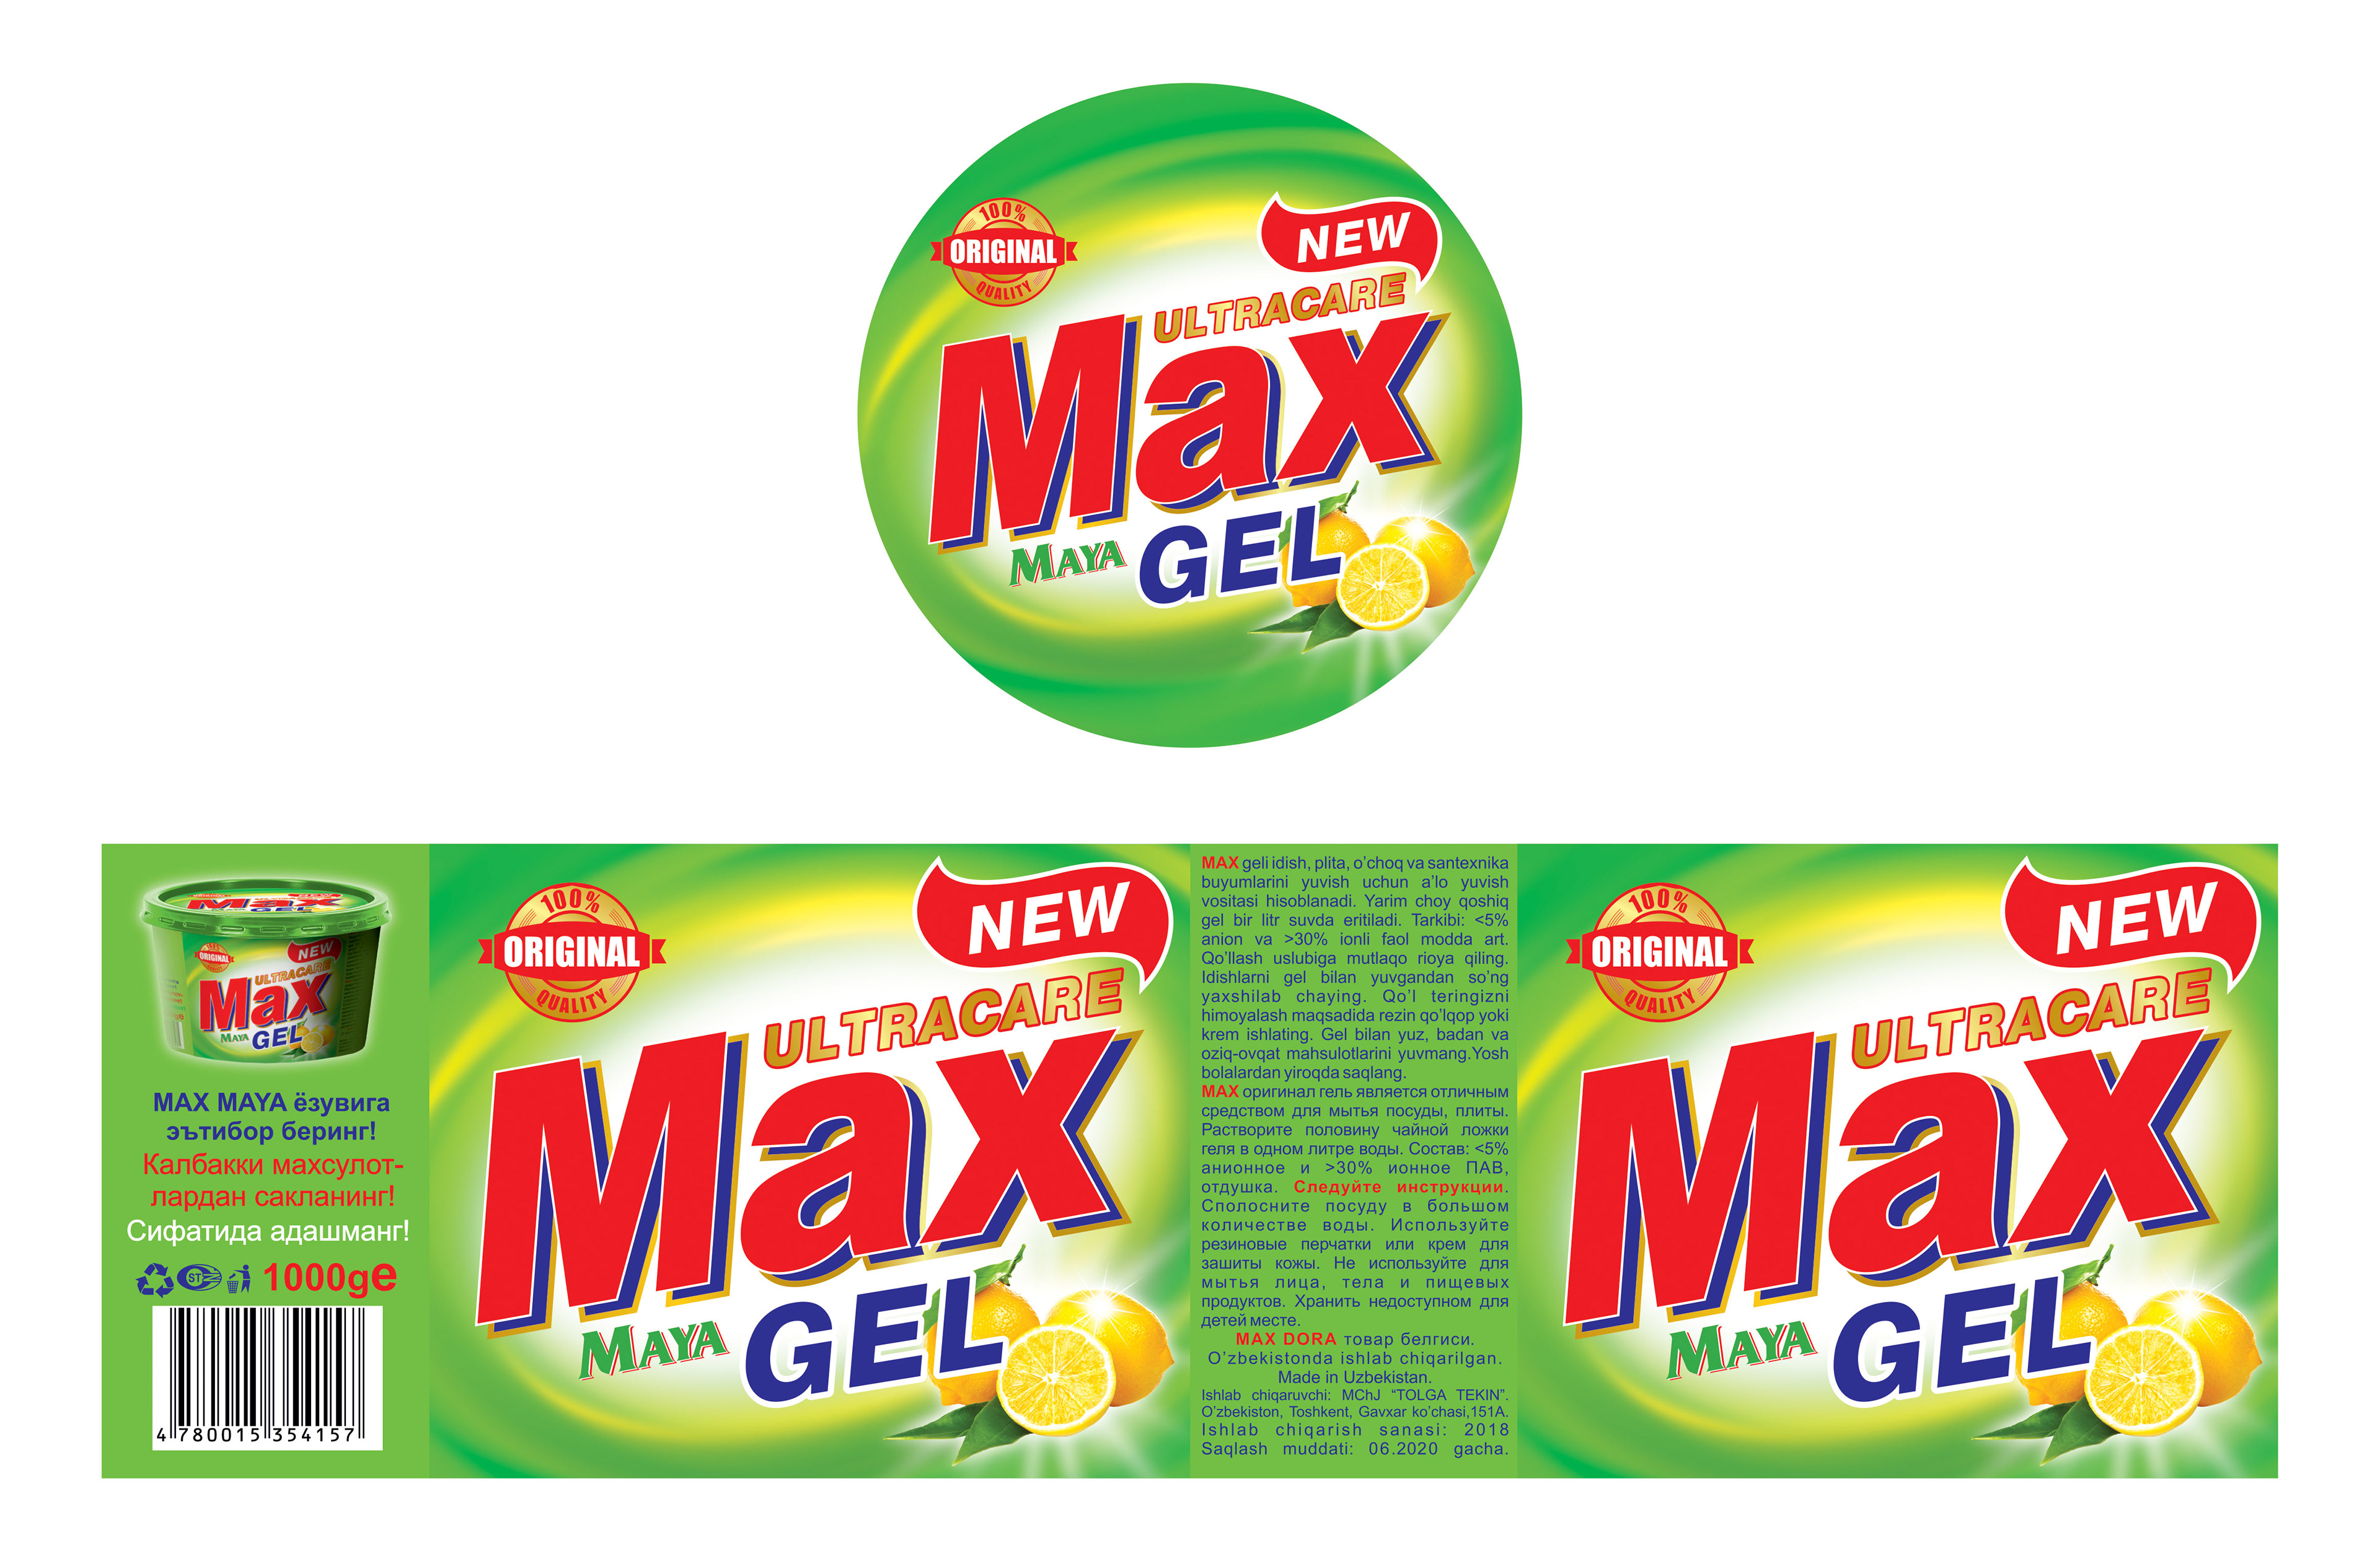 Макс оригинал. Max Gel. Мах гель для посуды. Max Gel Maya. Гель для мытья посуды Max Maya гель 1кг.